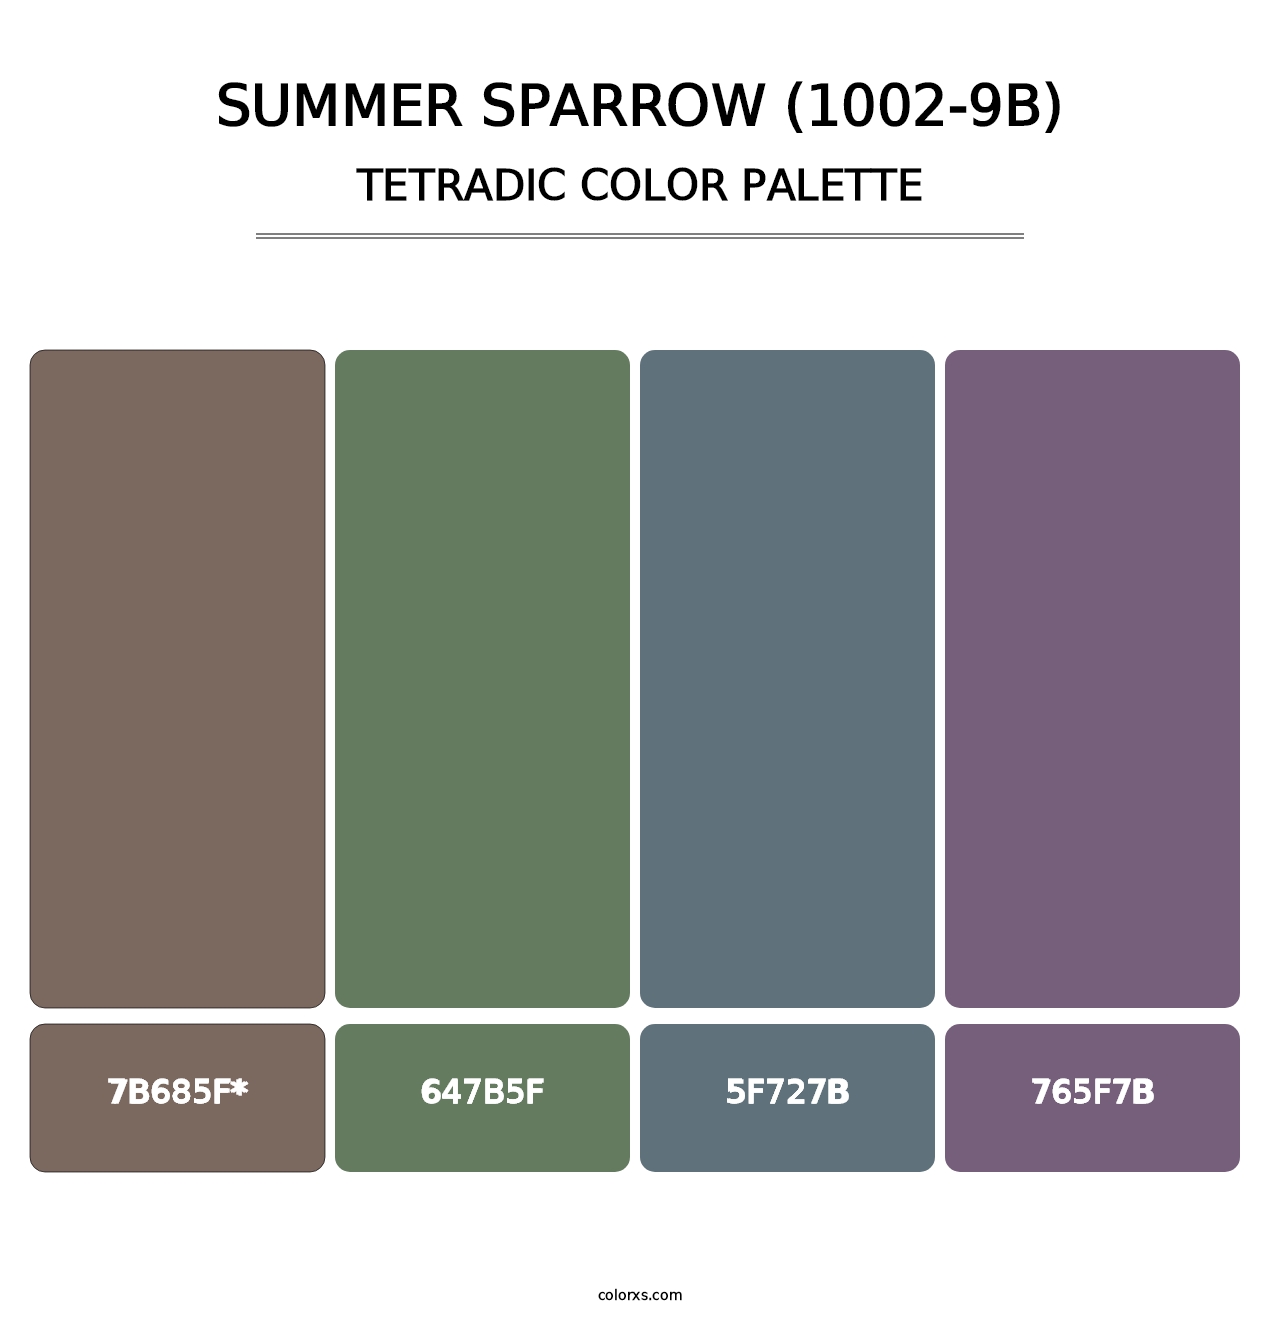 Summer Sparrow (1002-9B) - Tetradic Color Palette